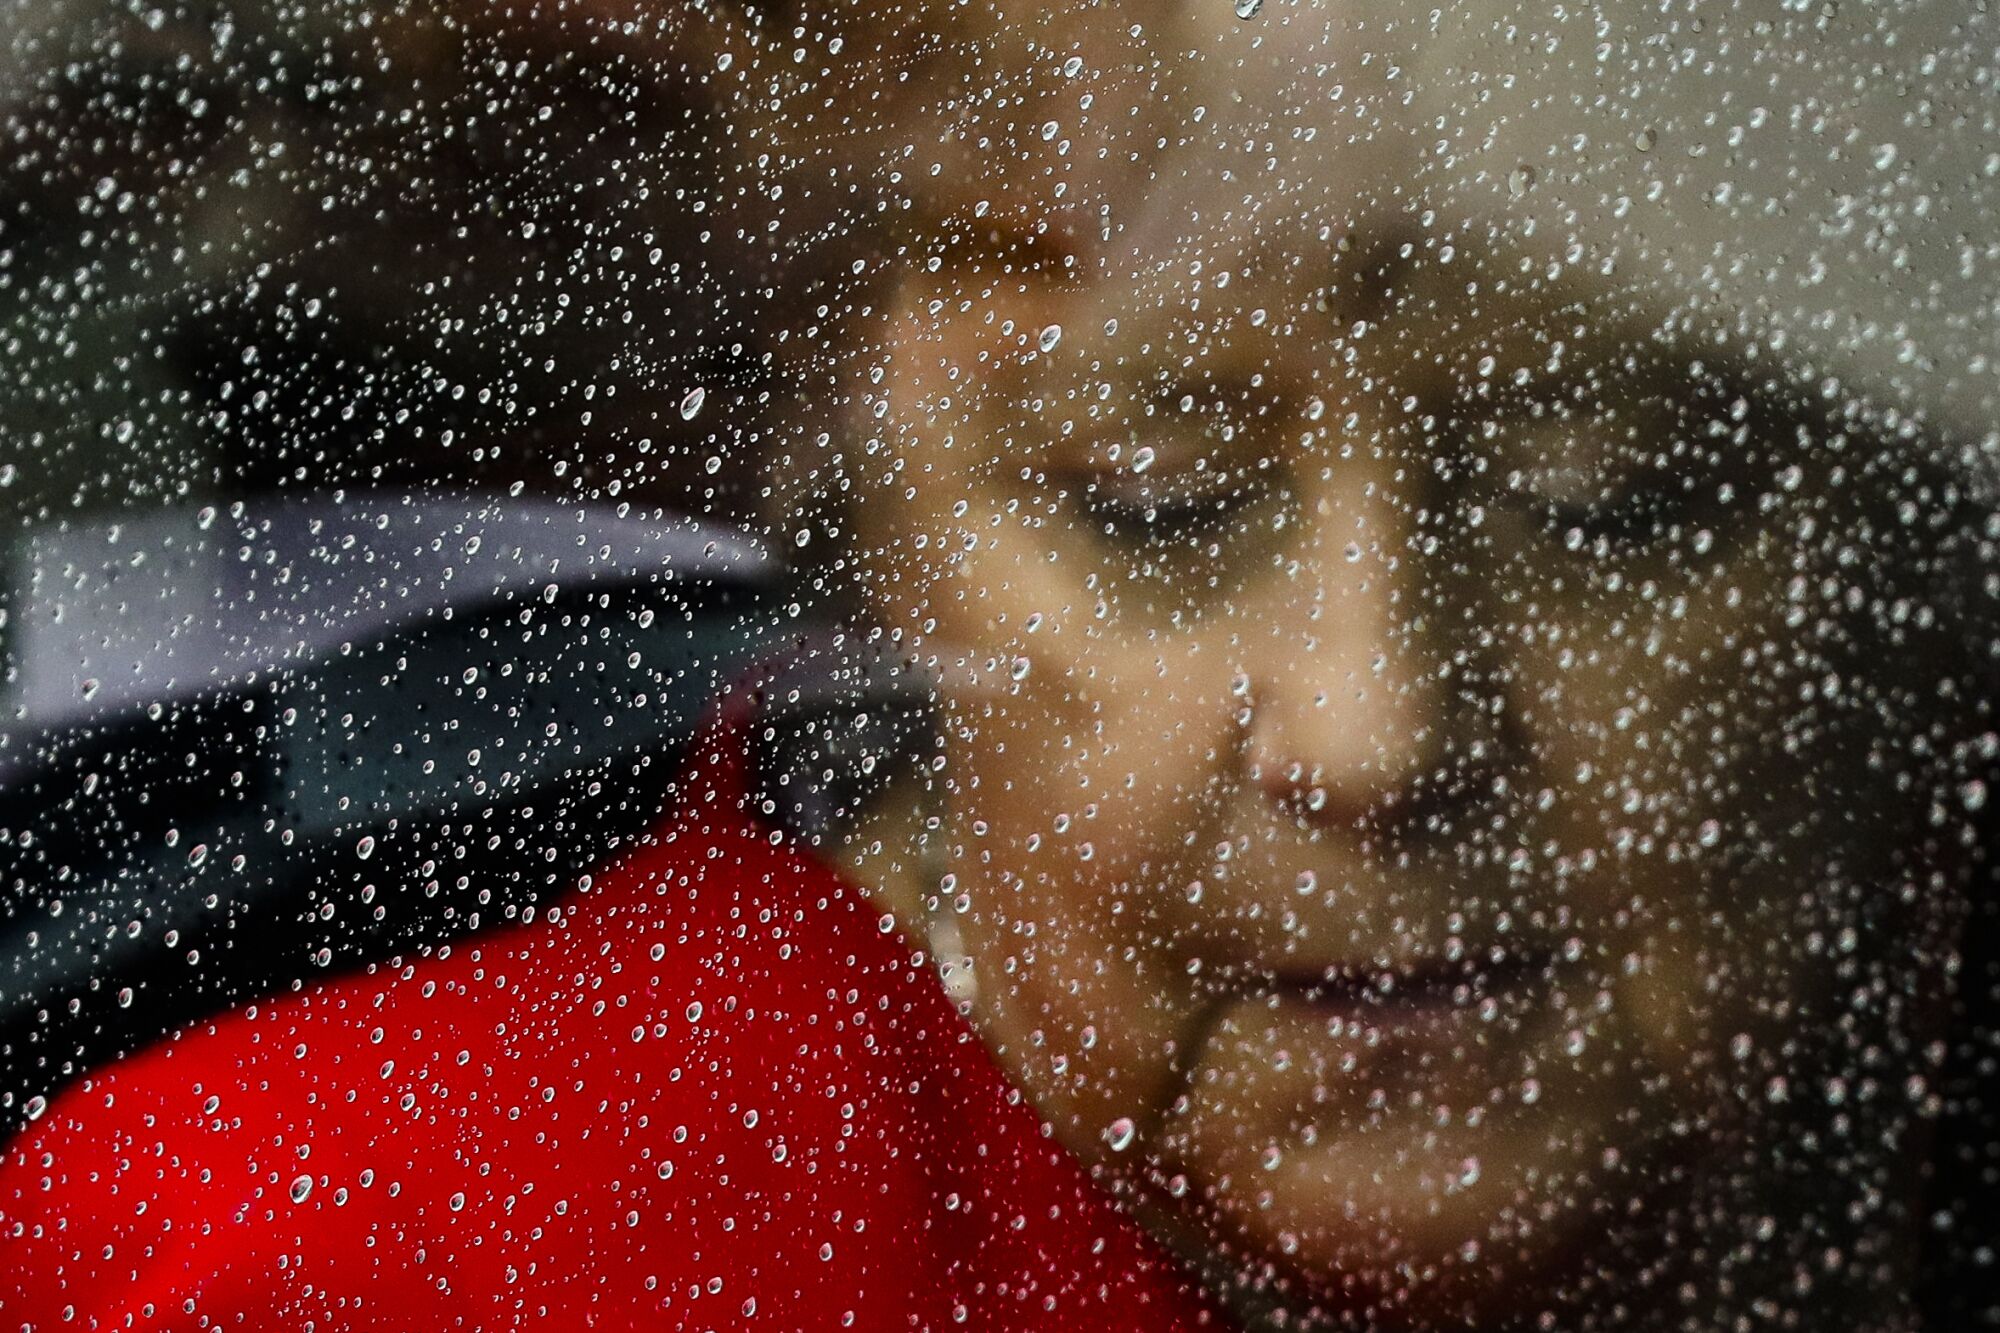 Angela Merkel, in a red jacket, looks down behind a rain-covered car window 